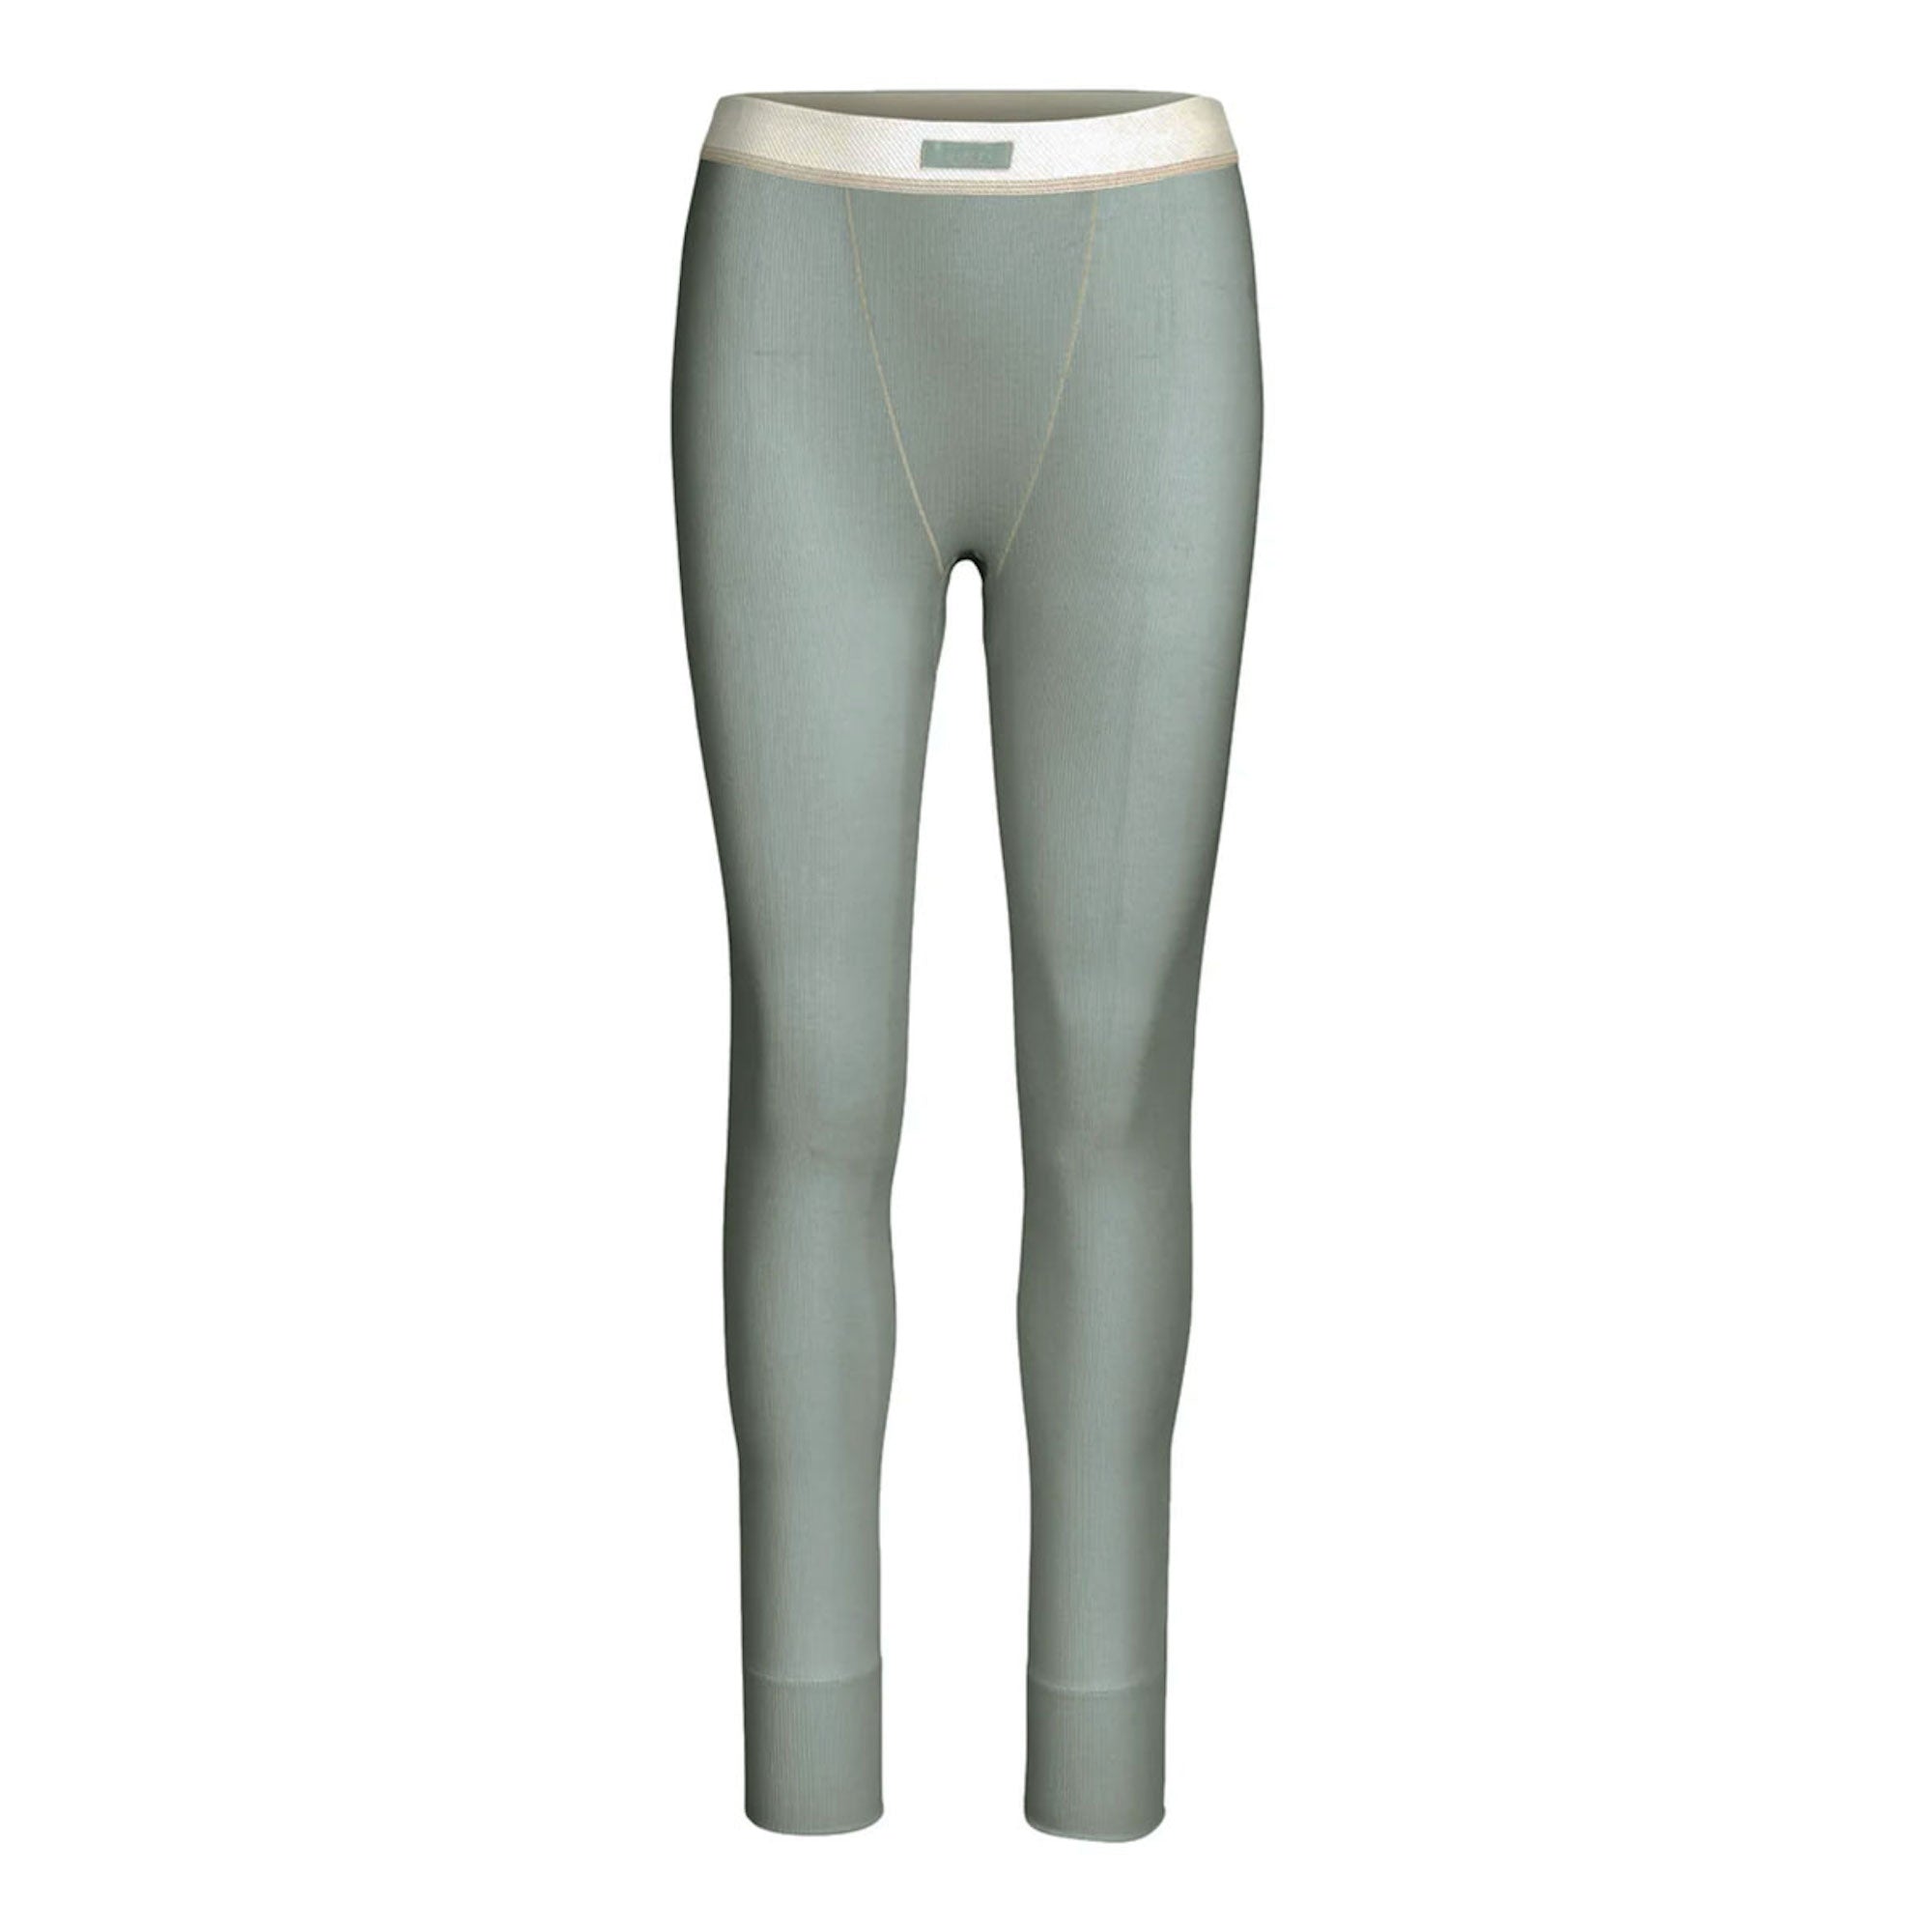 Women's Soft Cotton Leggings, Charcoal Gray S, 1 Pack